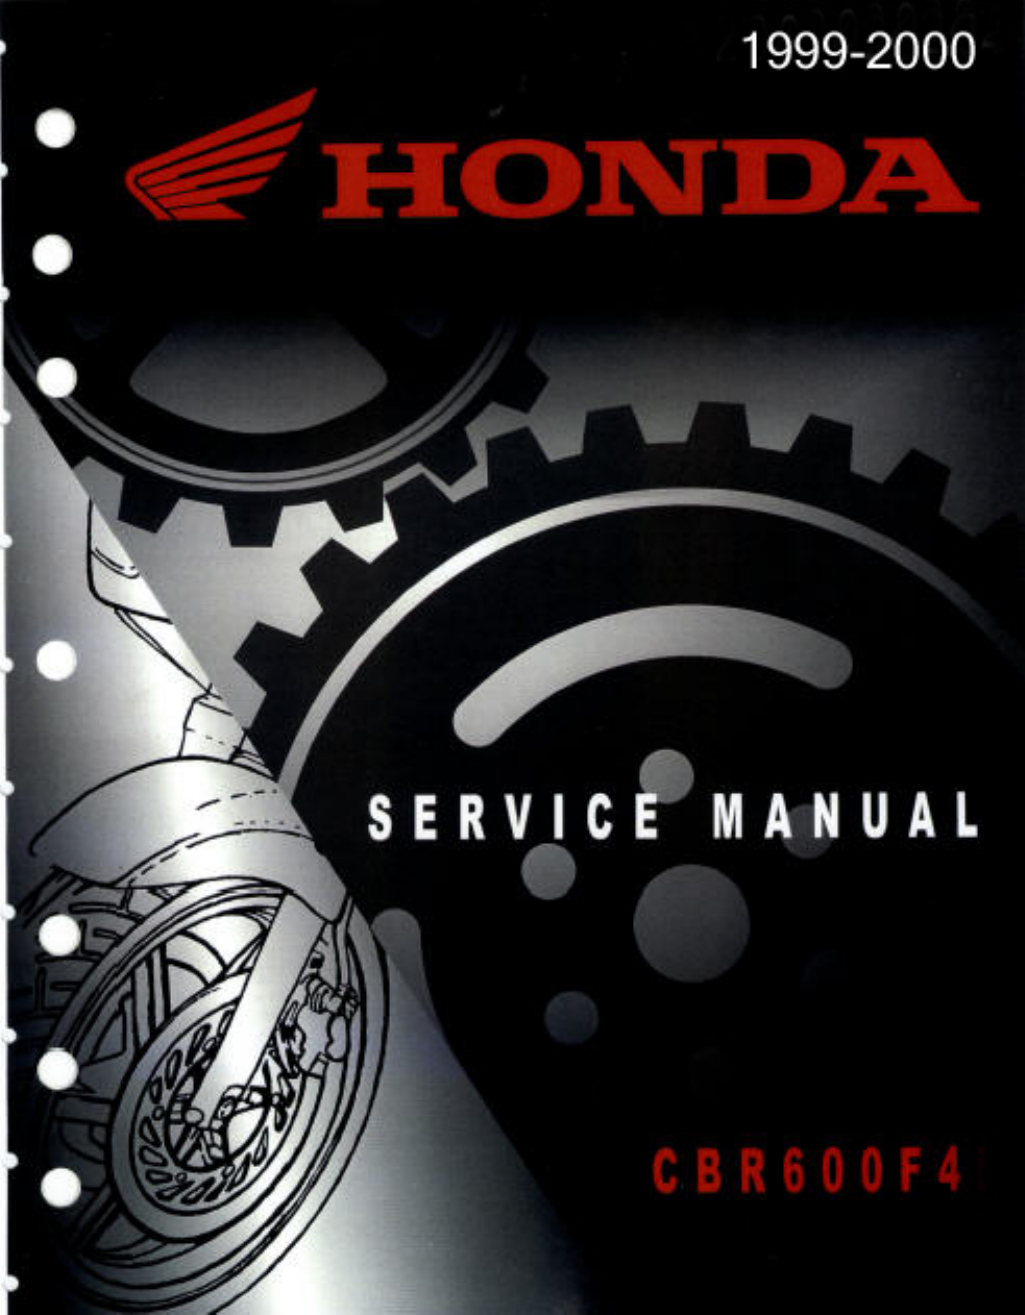 1999-2000 Honda CBR 600 F4 repair, service and shop manual Preview image 6